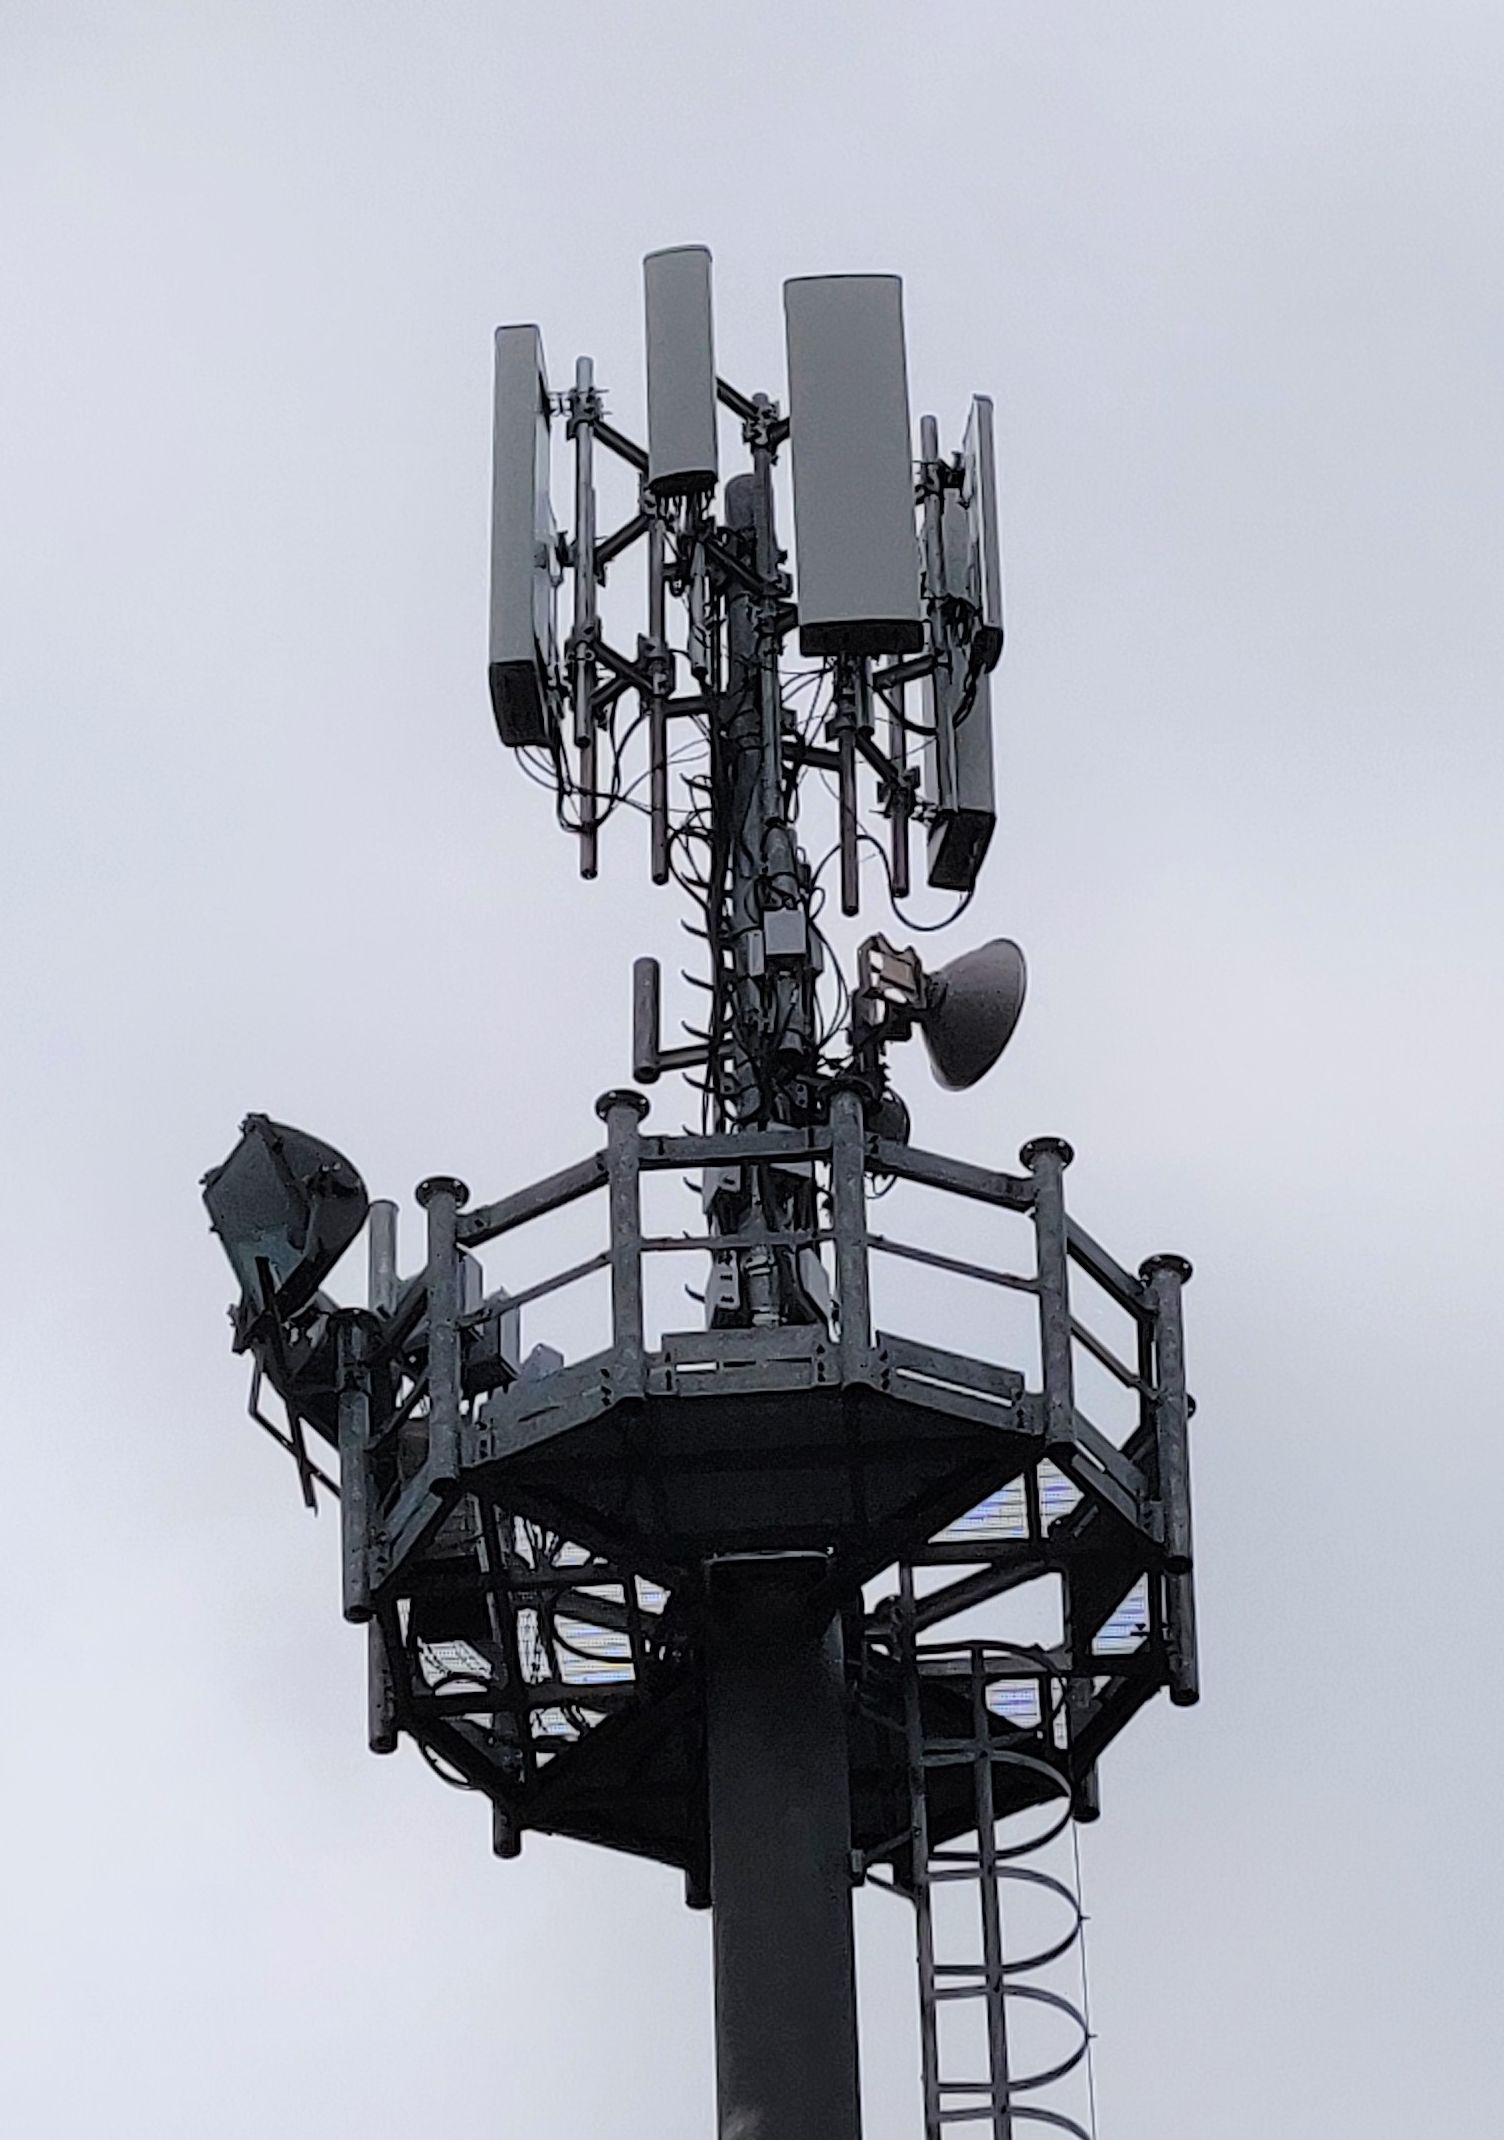 Die neuen Antennen im November 2019. Foto Daniel Zanolli